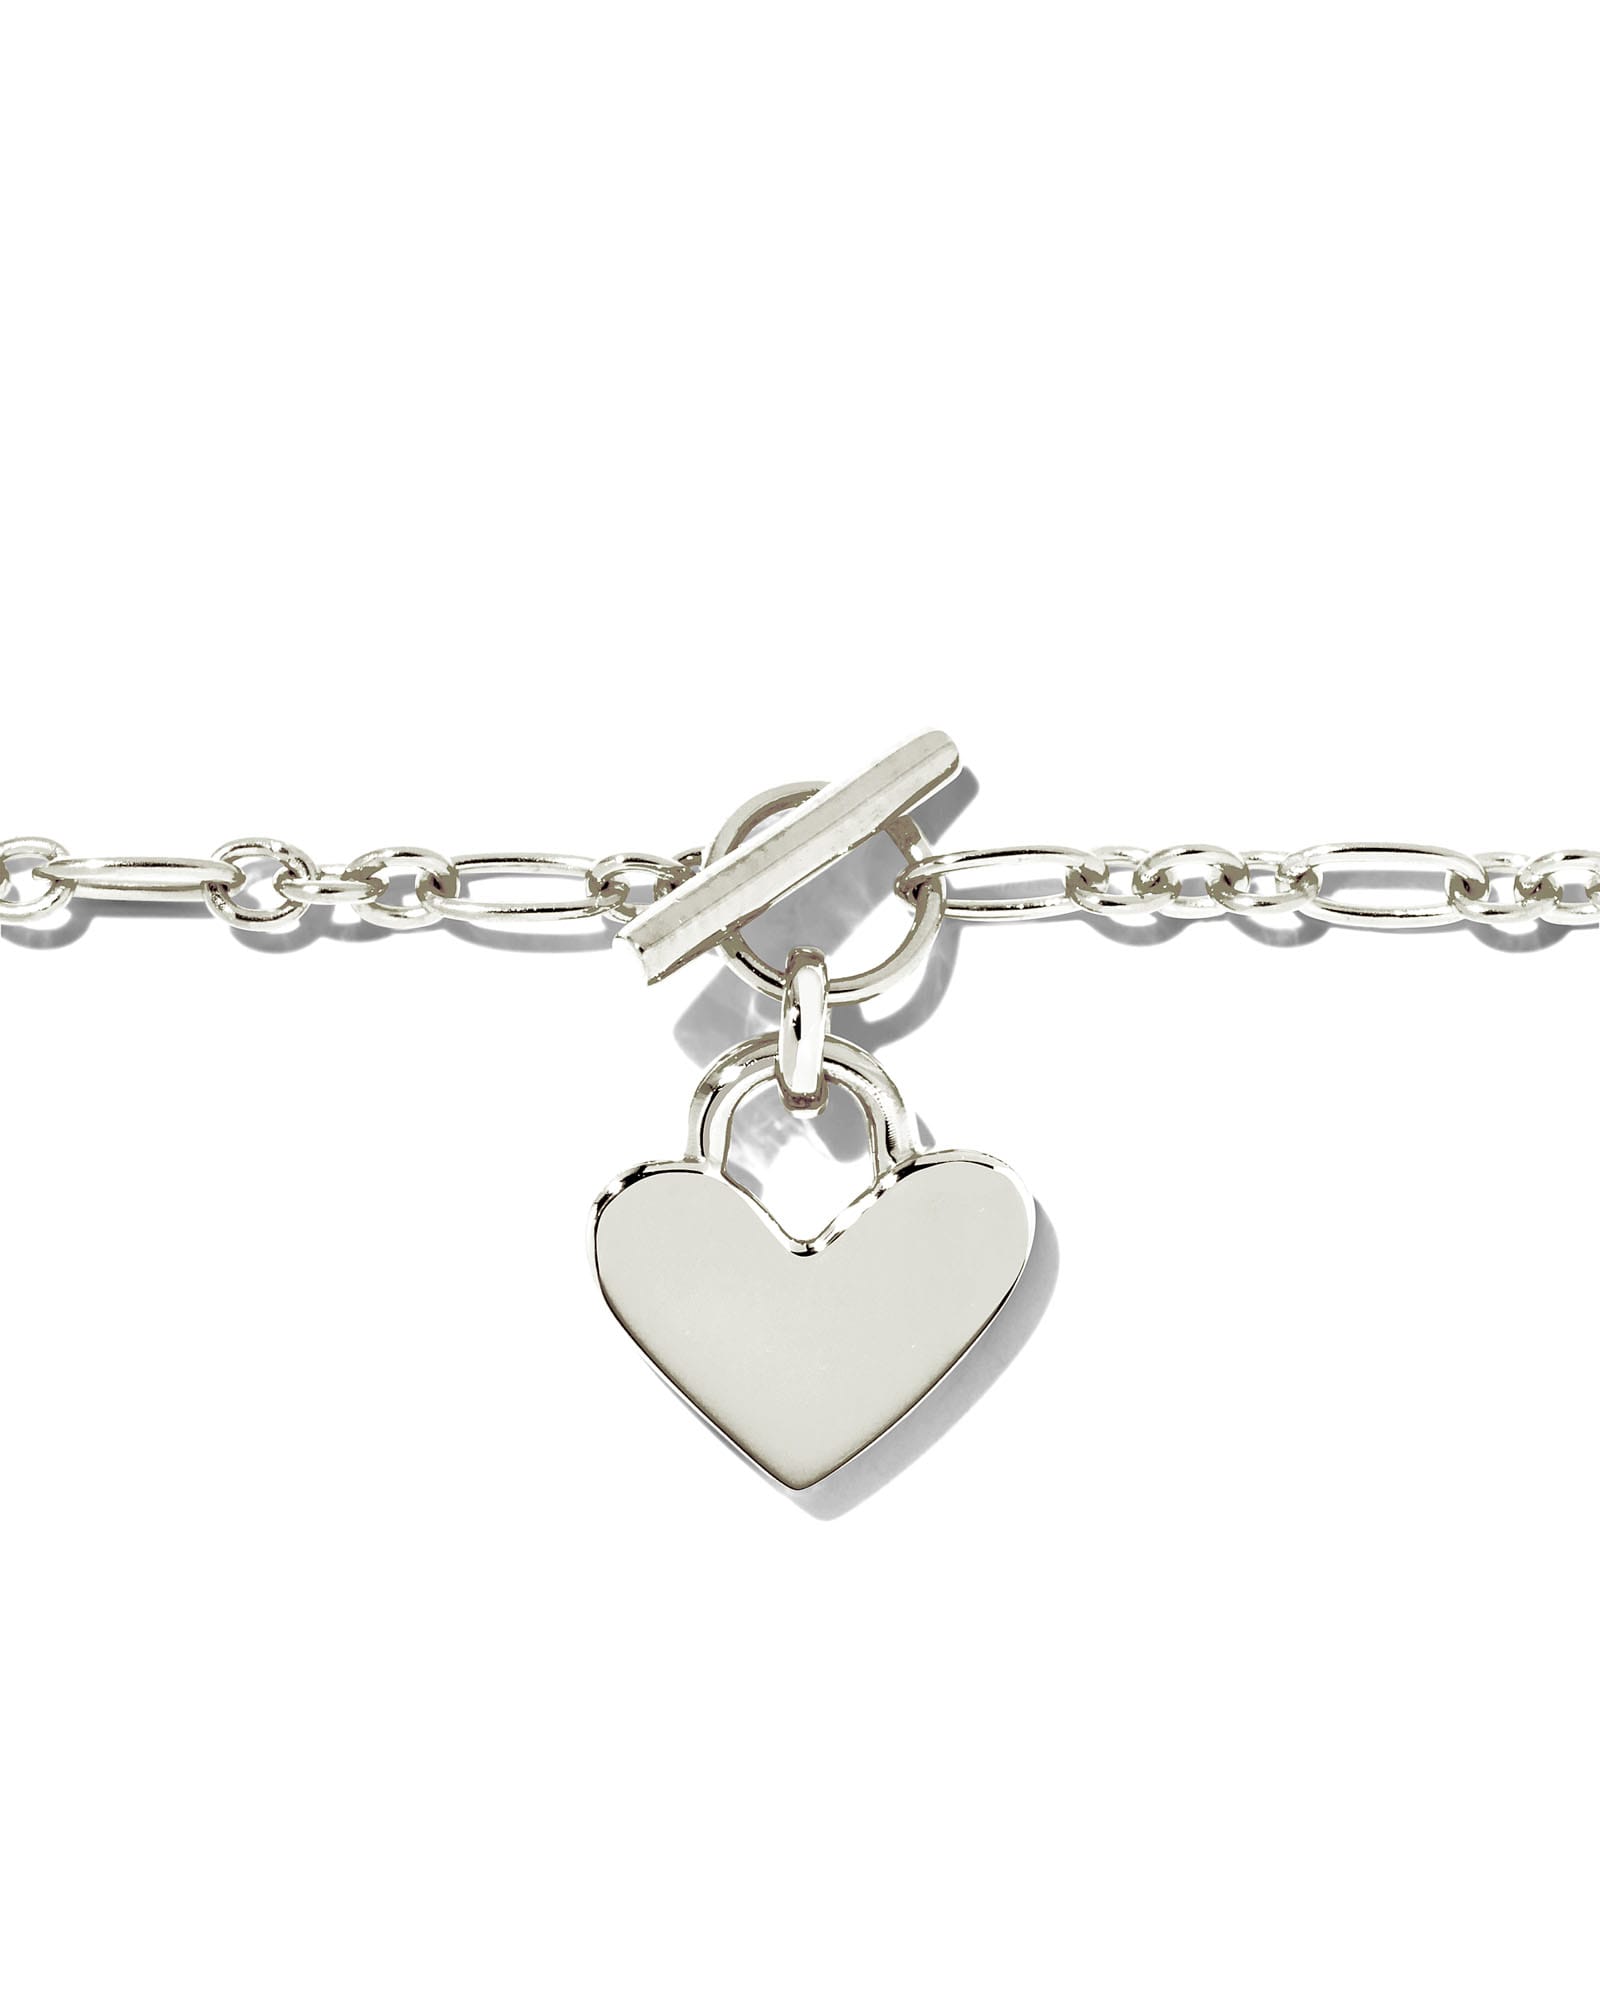 Silver Metal Heart Lock Charm Toggle Bracelet *FINAL SALE*